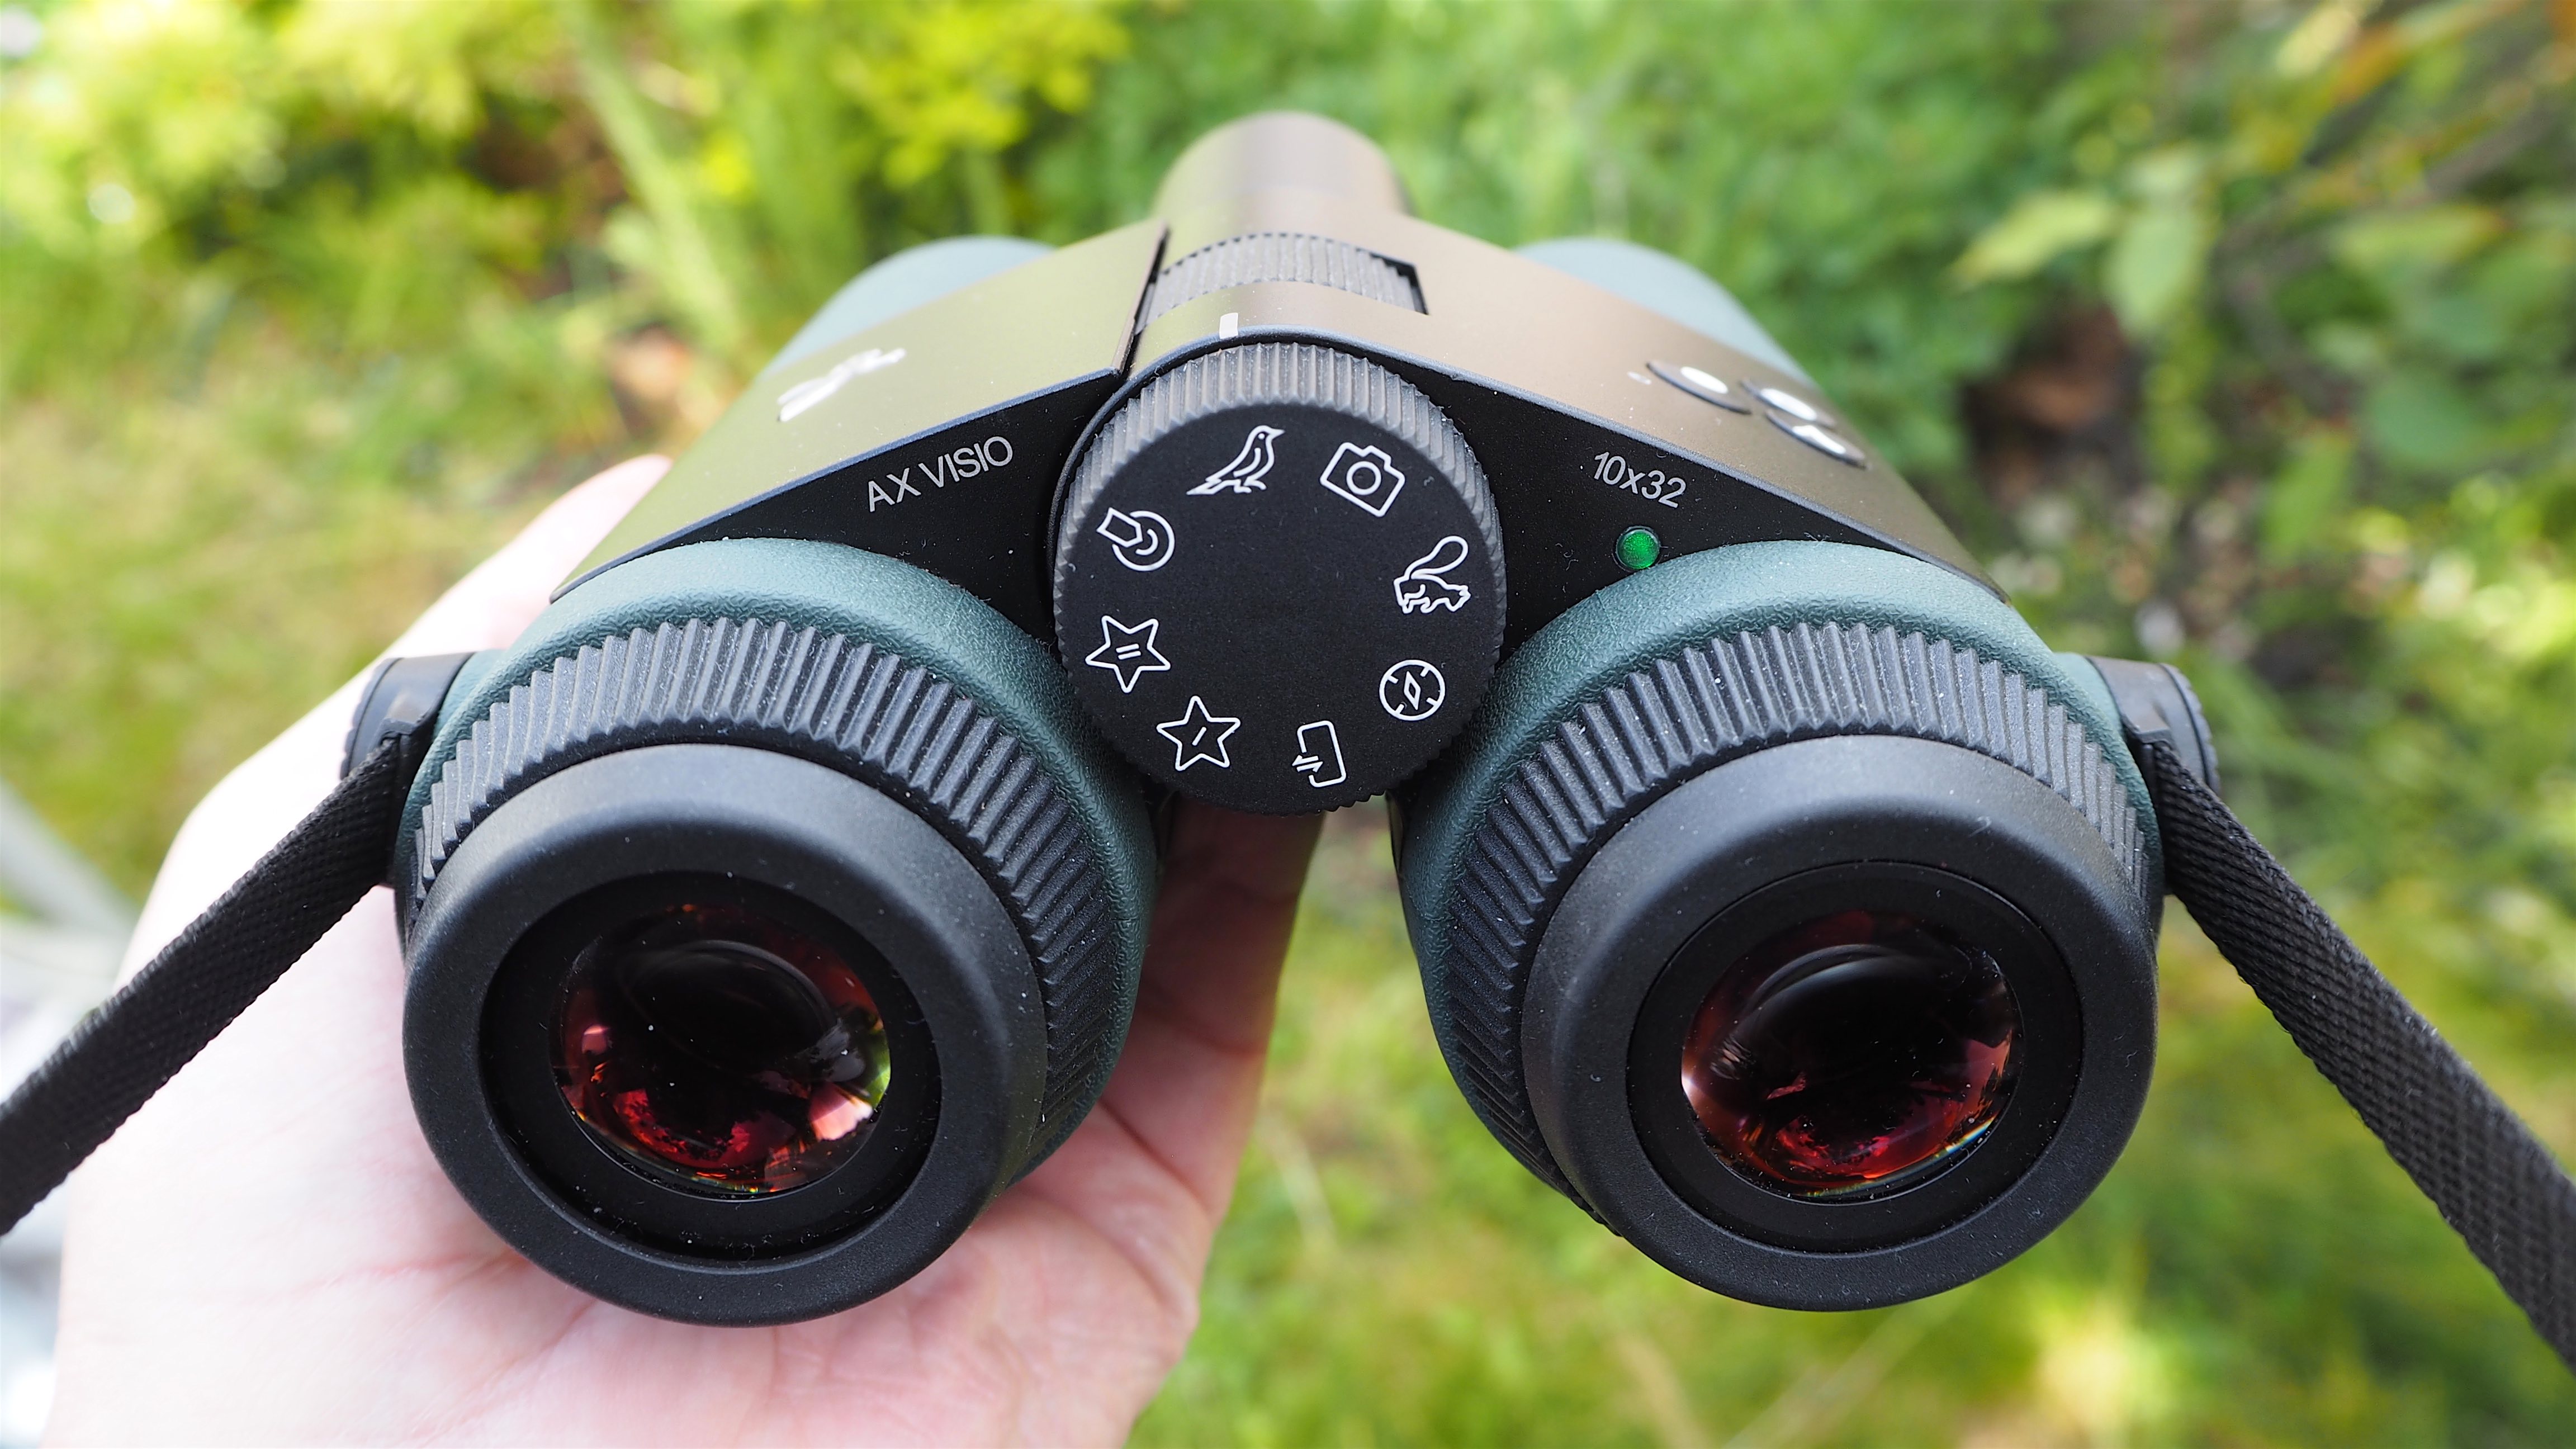 Swarovski AX Visio 10x32 binoculars close up of controls